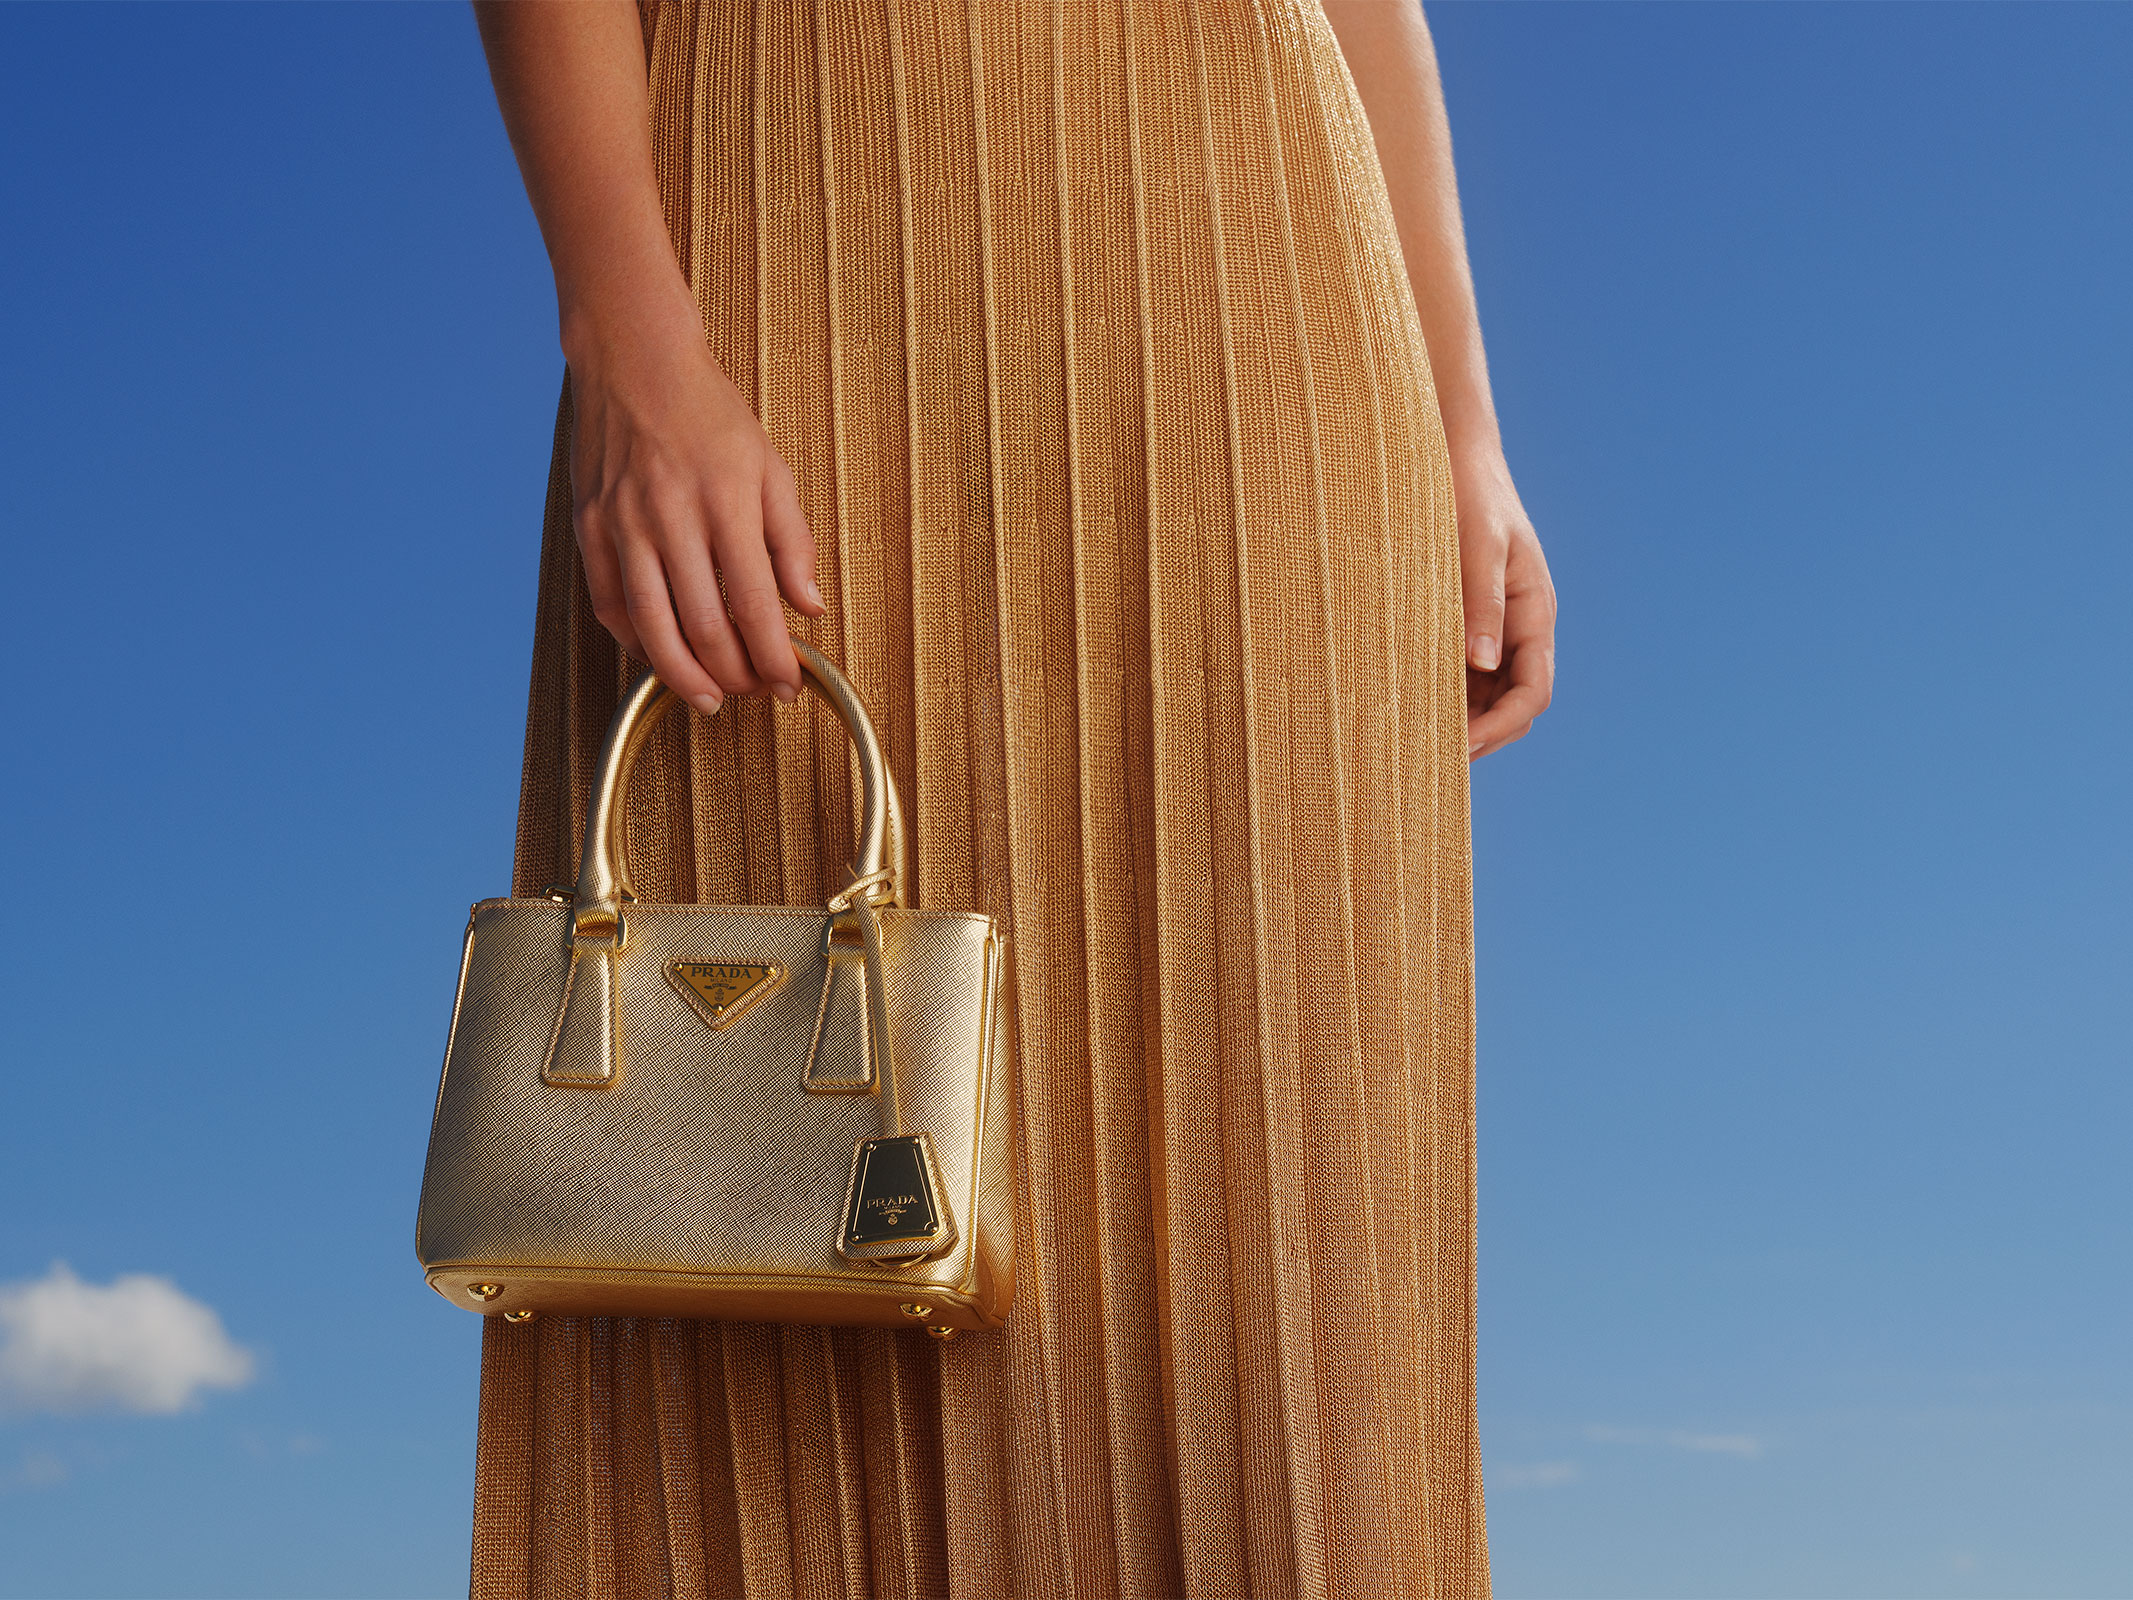 Prada Galleria Saffiano Leather Mini-Bag - Gold